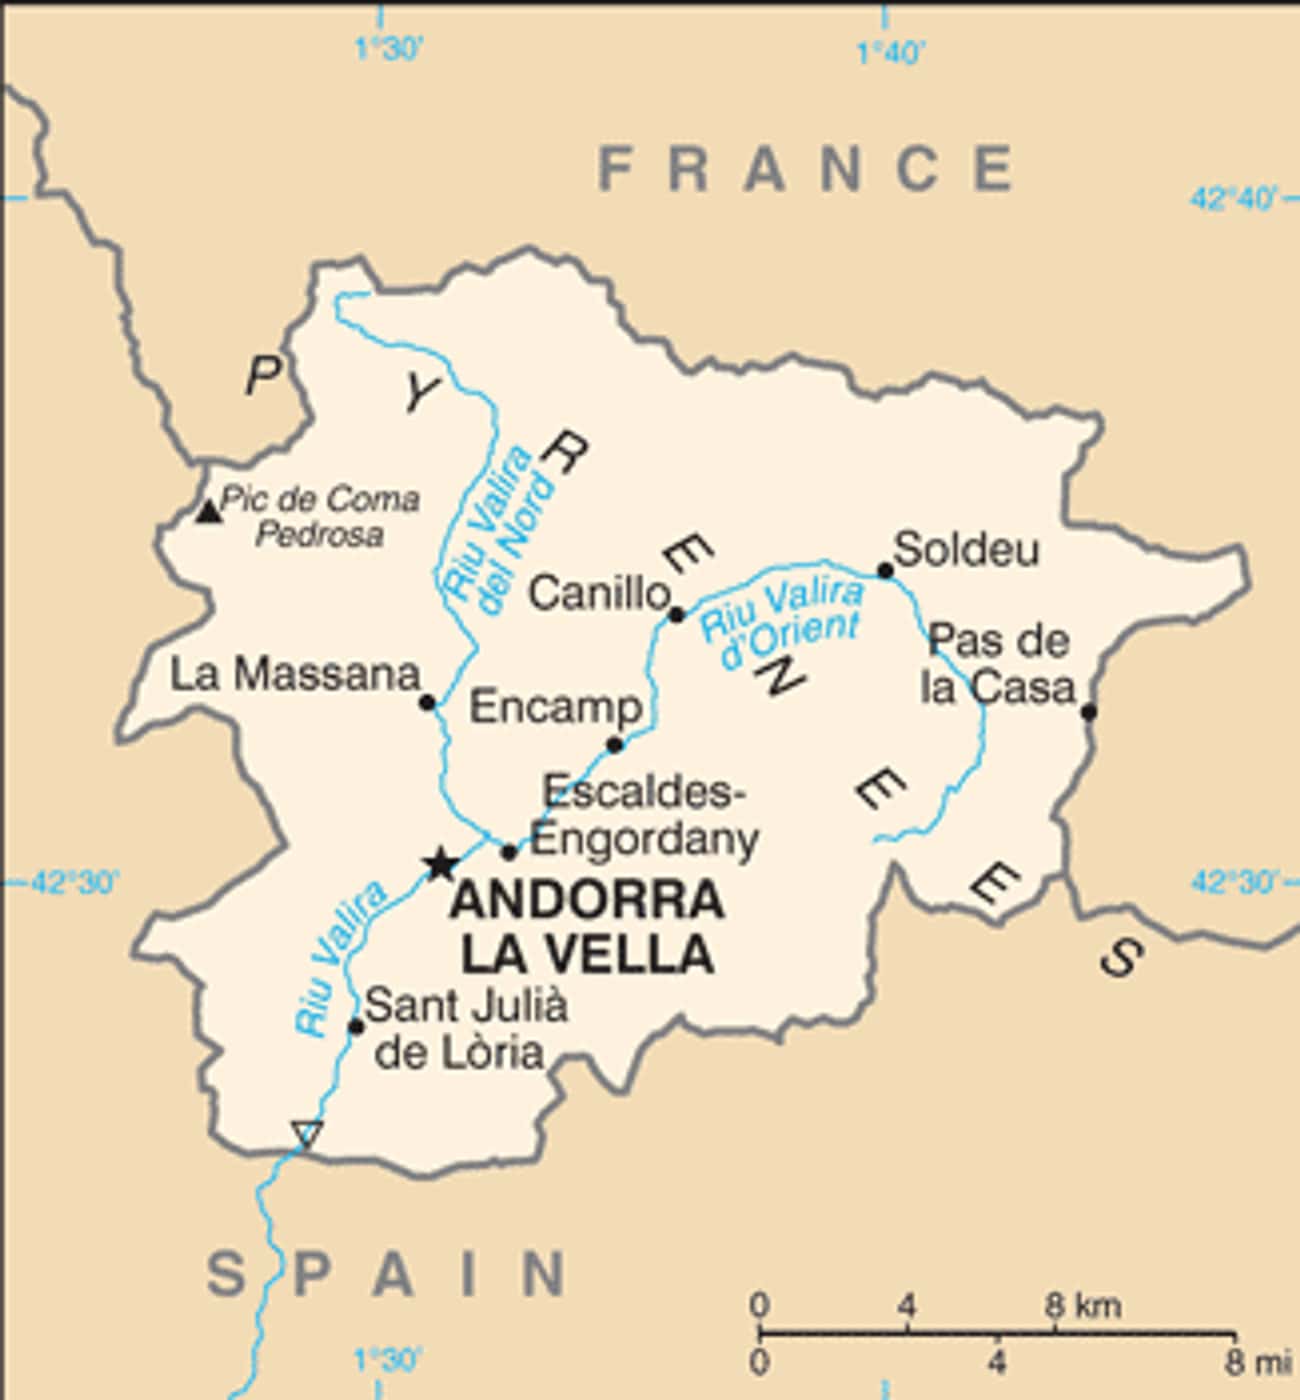 Андорра какая страна. Андорра на карте. Андорра на карте Испании. Княжество Андорра на карте. Где находится Андорра на карте.